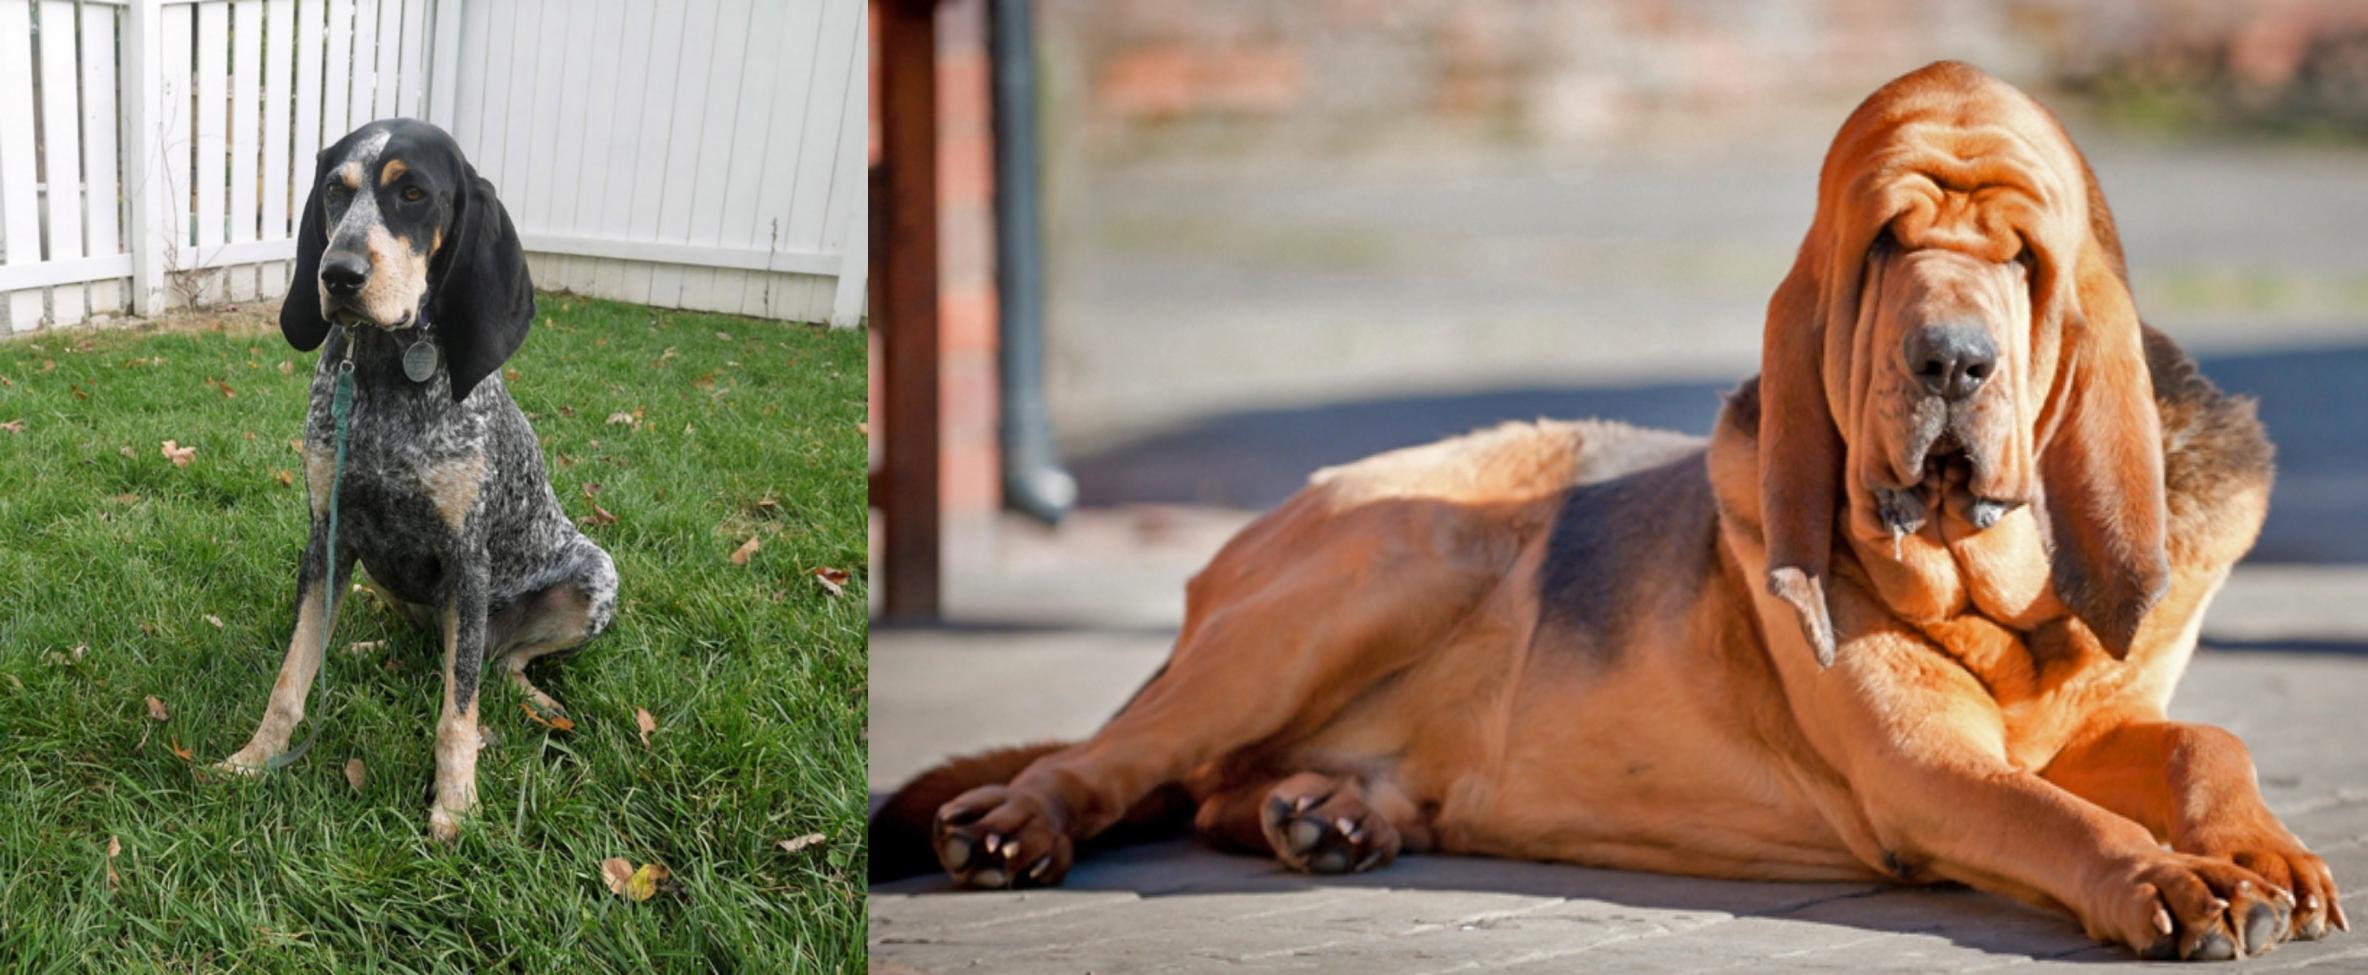 Grand Bleu De Gascogne Vs Bloodhound Breed Comparison